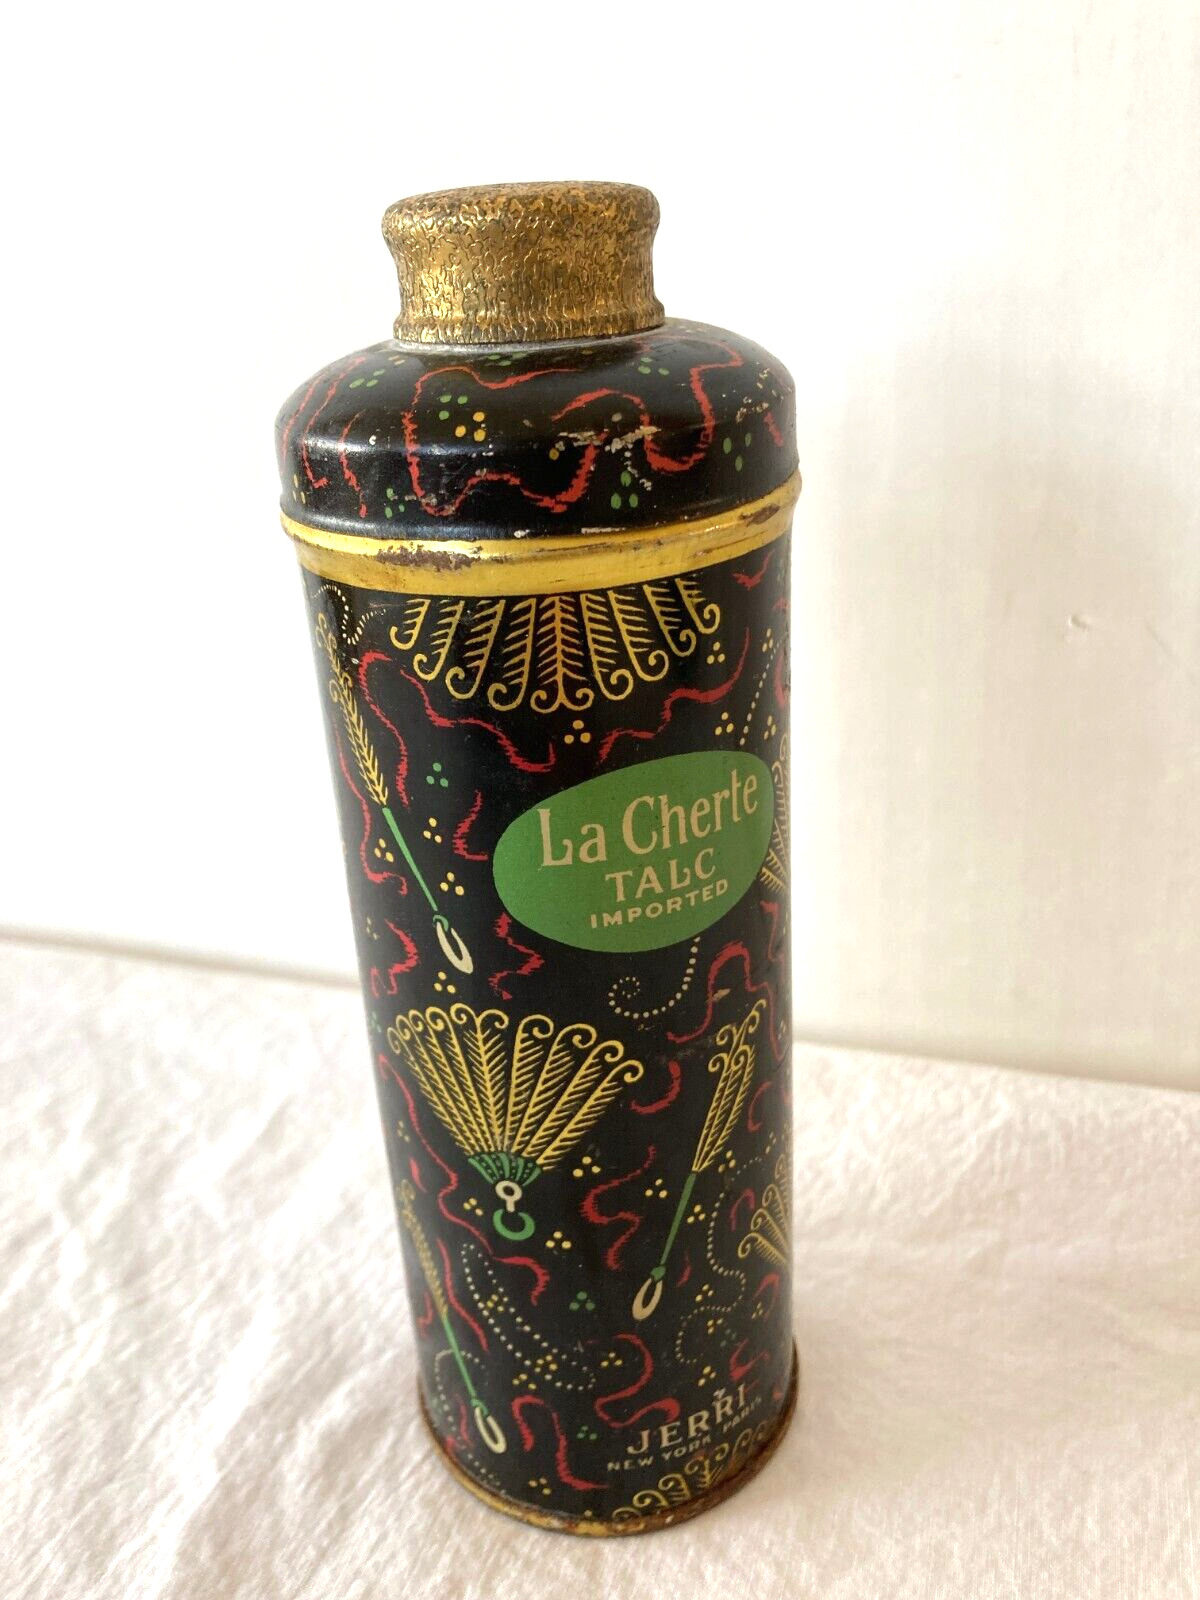 1920s La Cherte Talcum Powder Tin by Jerri NY & Paris Full Art Deco Graphics